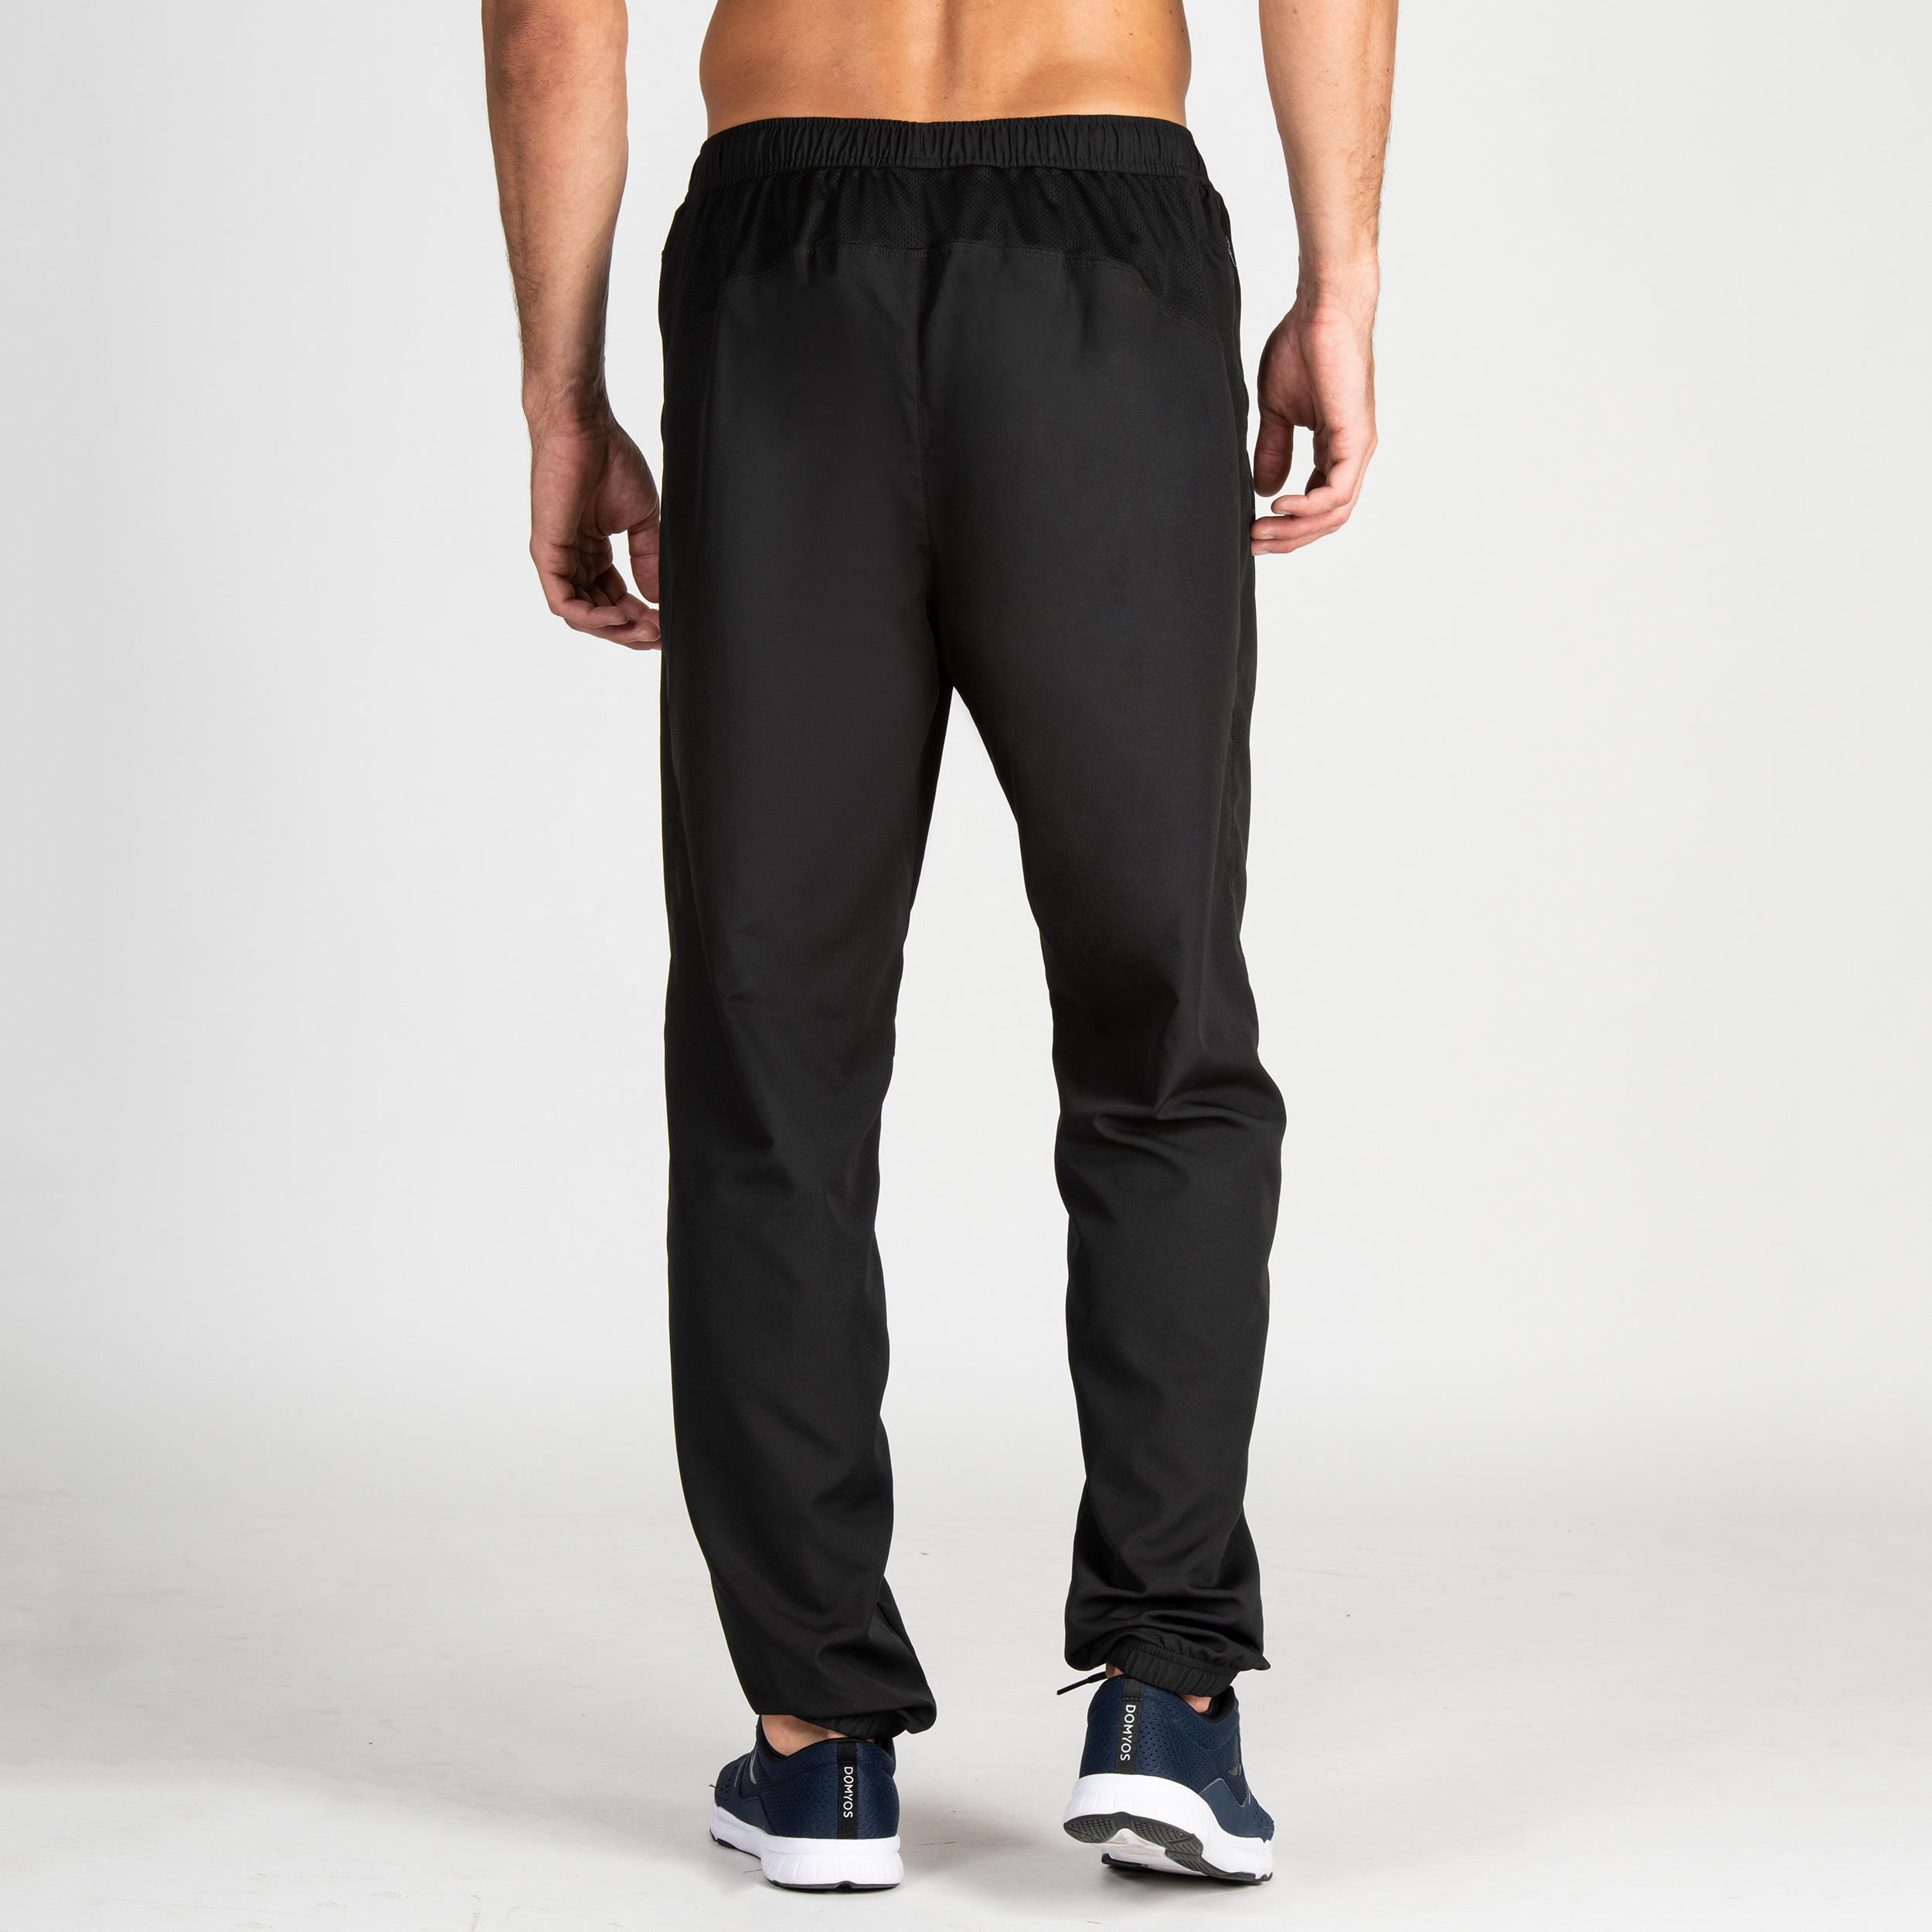 Plain Black Polyester Track Pants